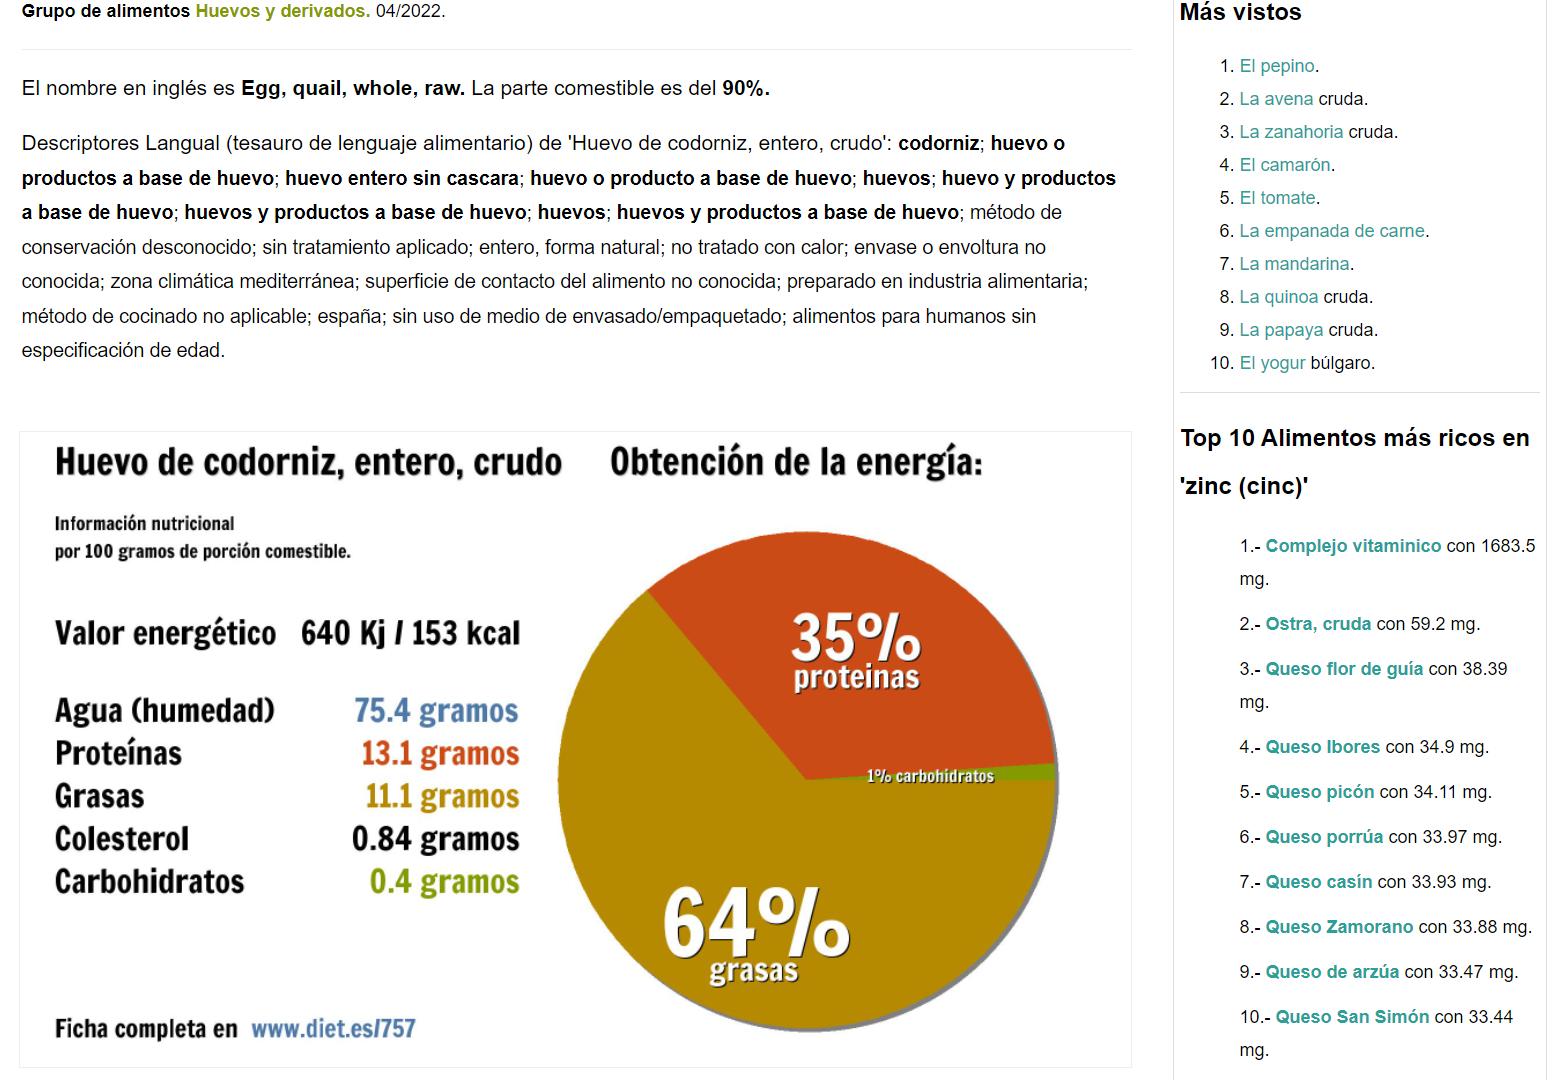 Imagen de la web diet.es